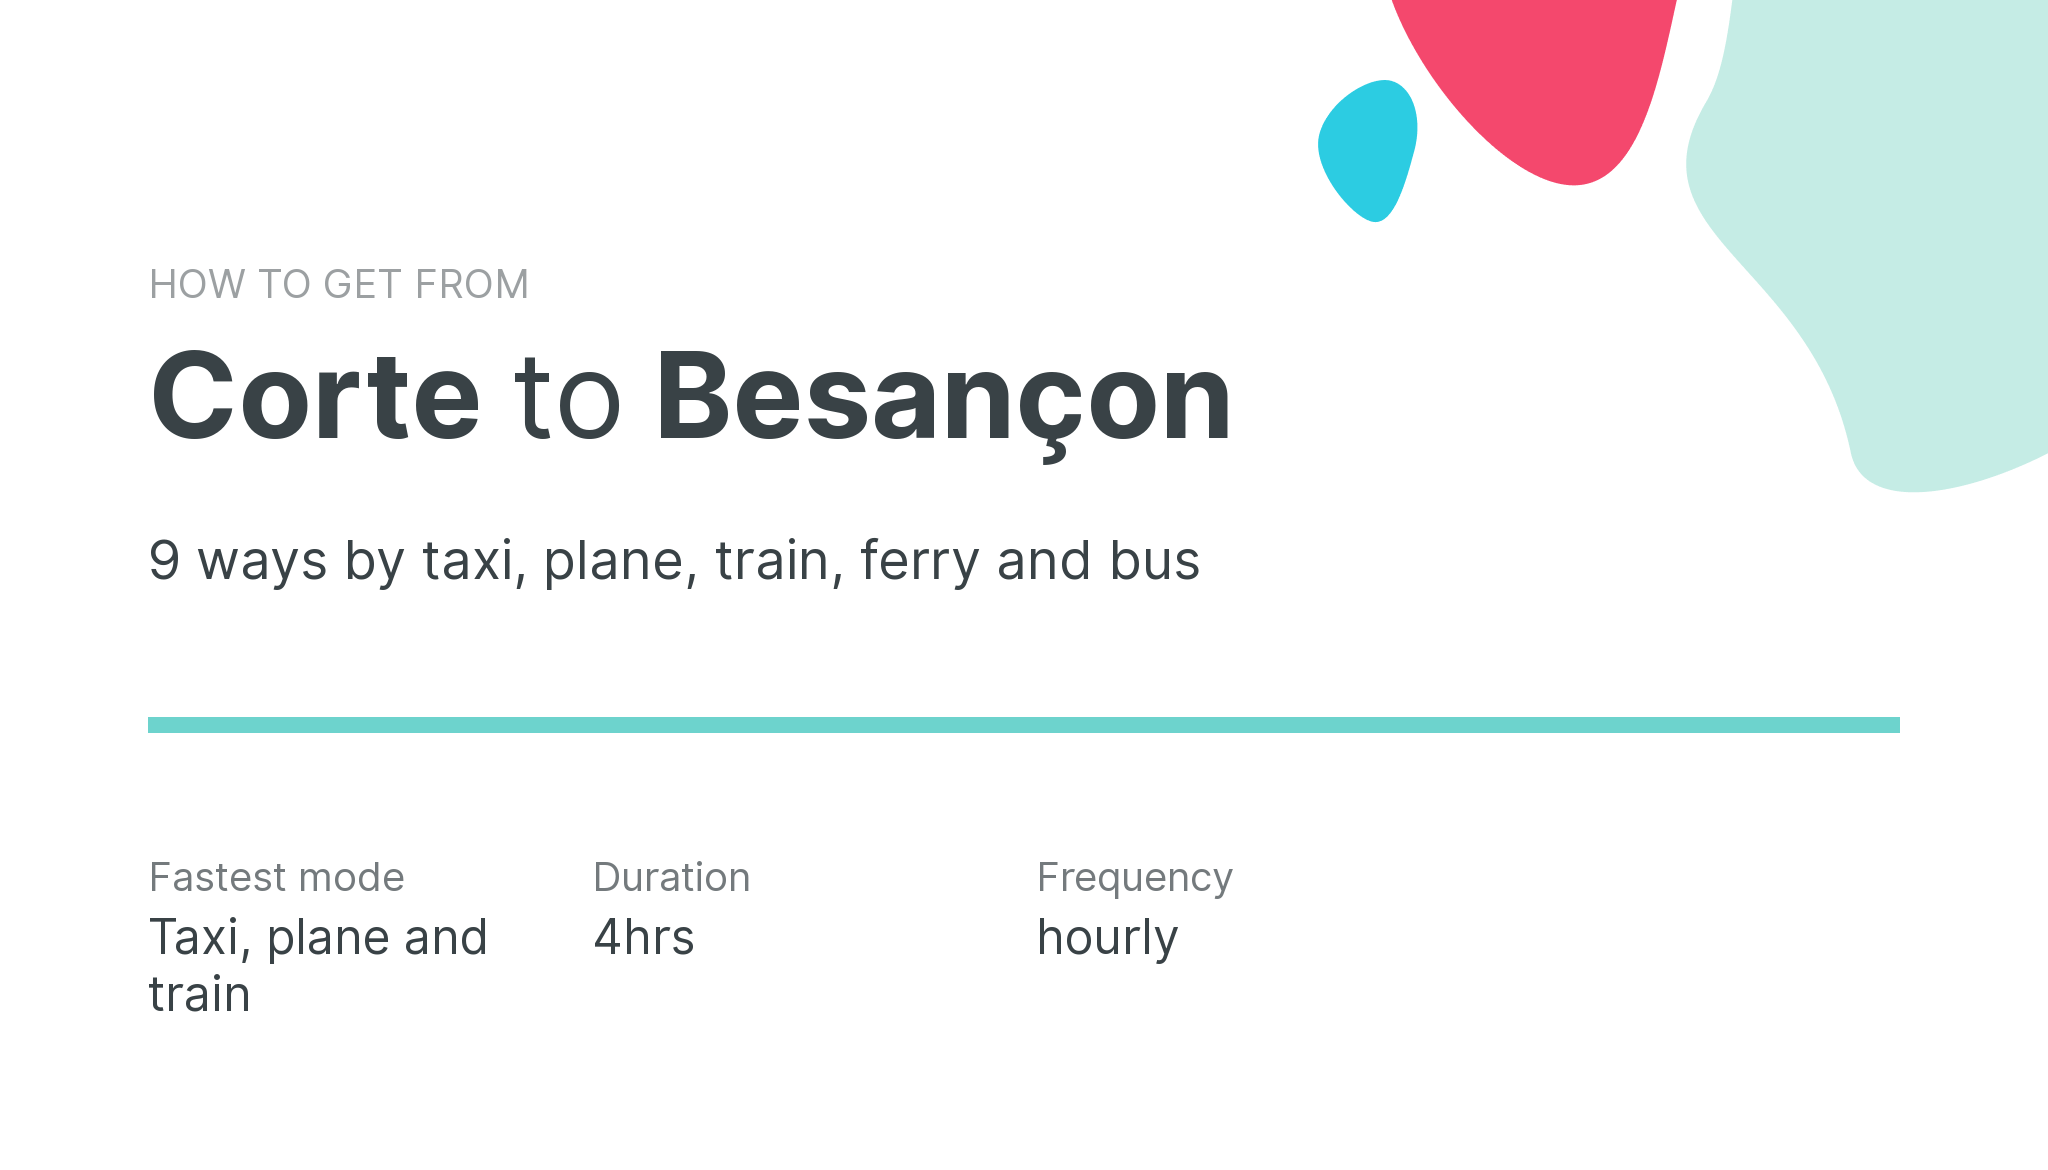 How do I get from Corte to Besançon